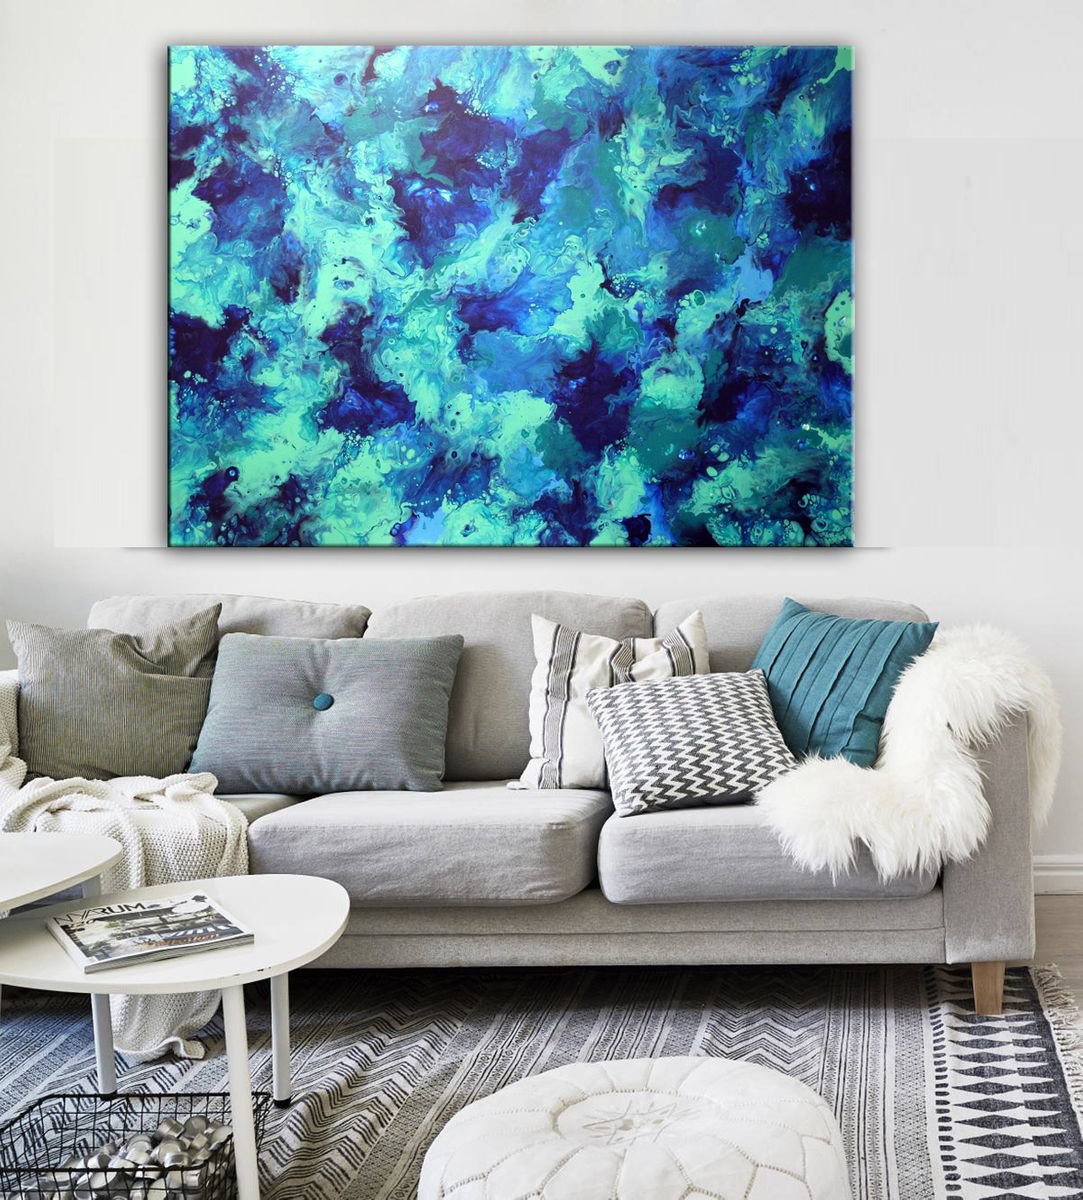 Deep Ocean - Large Abstract Painting 36 x 48 by Nataliya Stupak